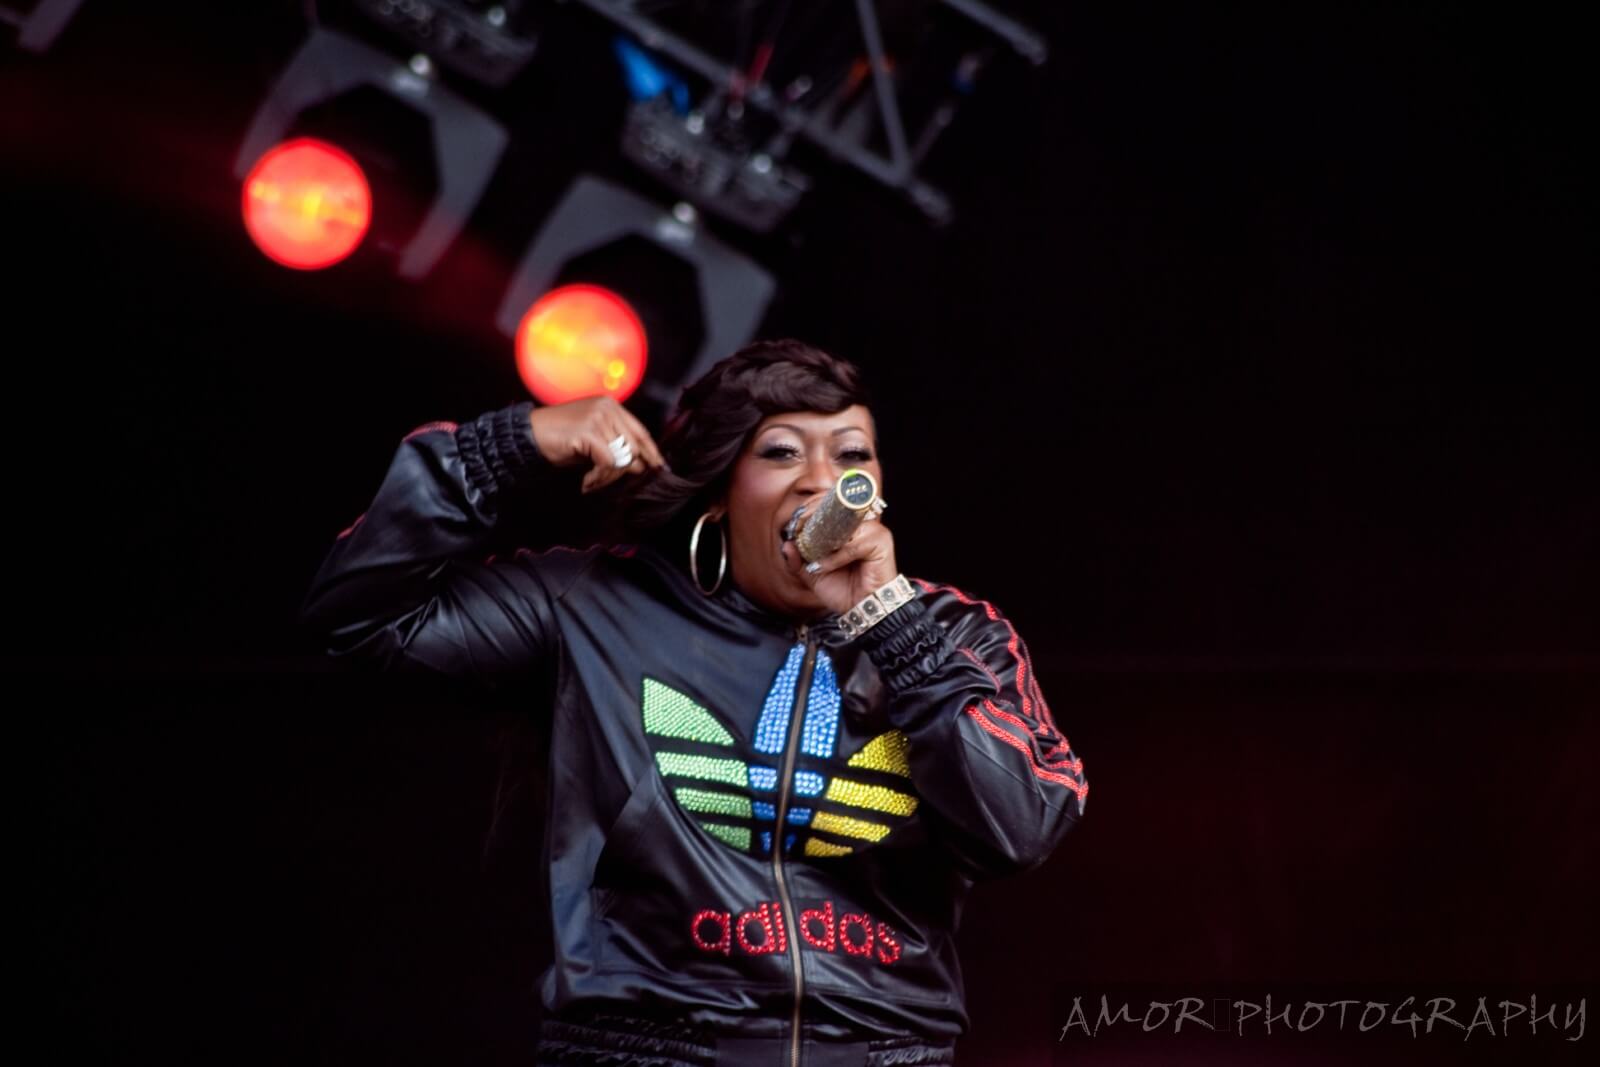 Missy Elliott performing live (stock image)